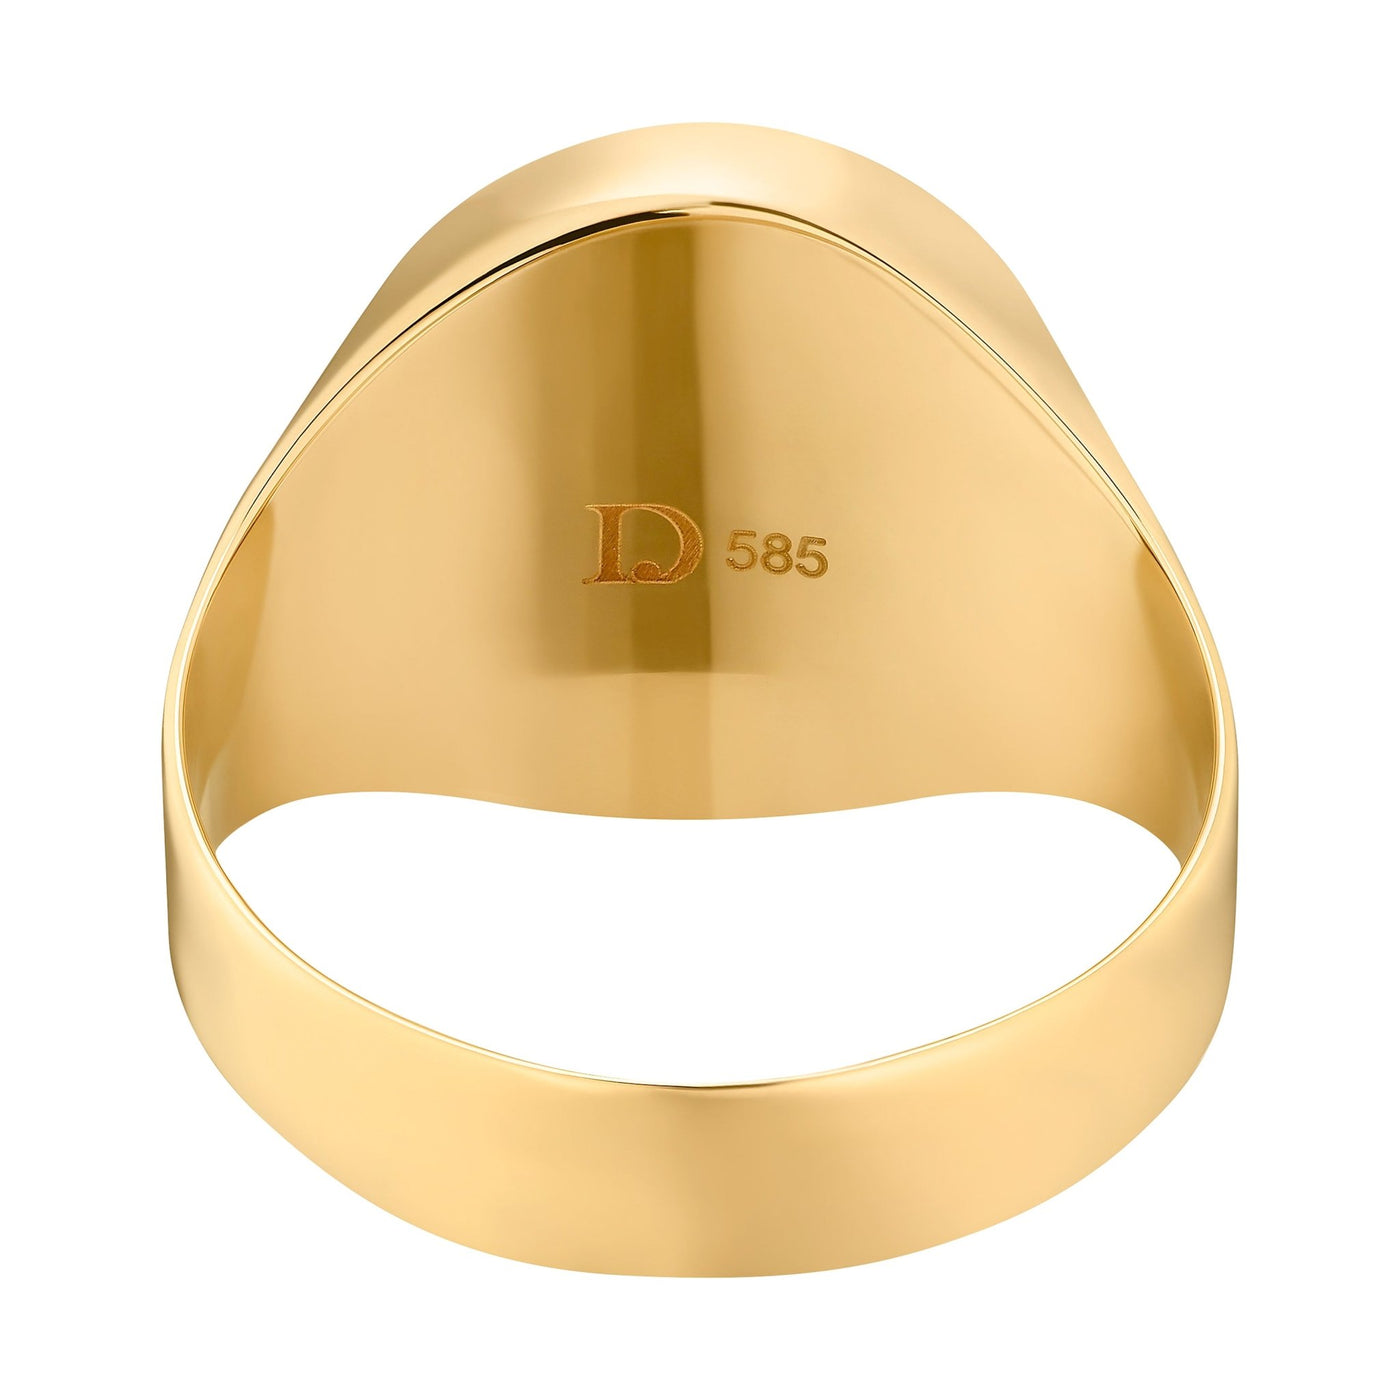 SIGNET RING ONYX OVAL 585 GOLD - IDENTIM®